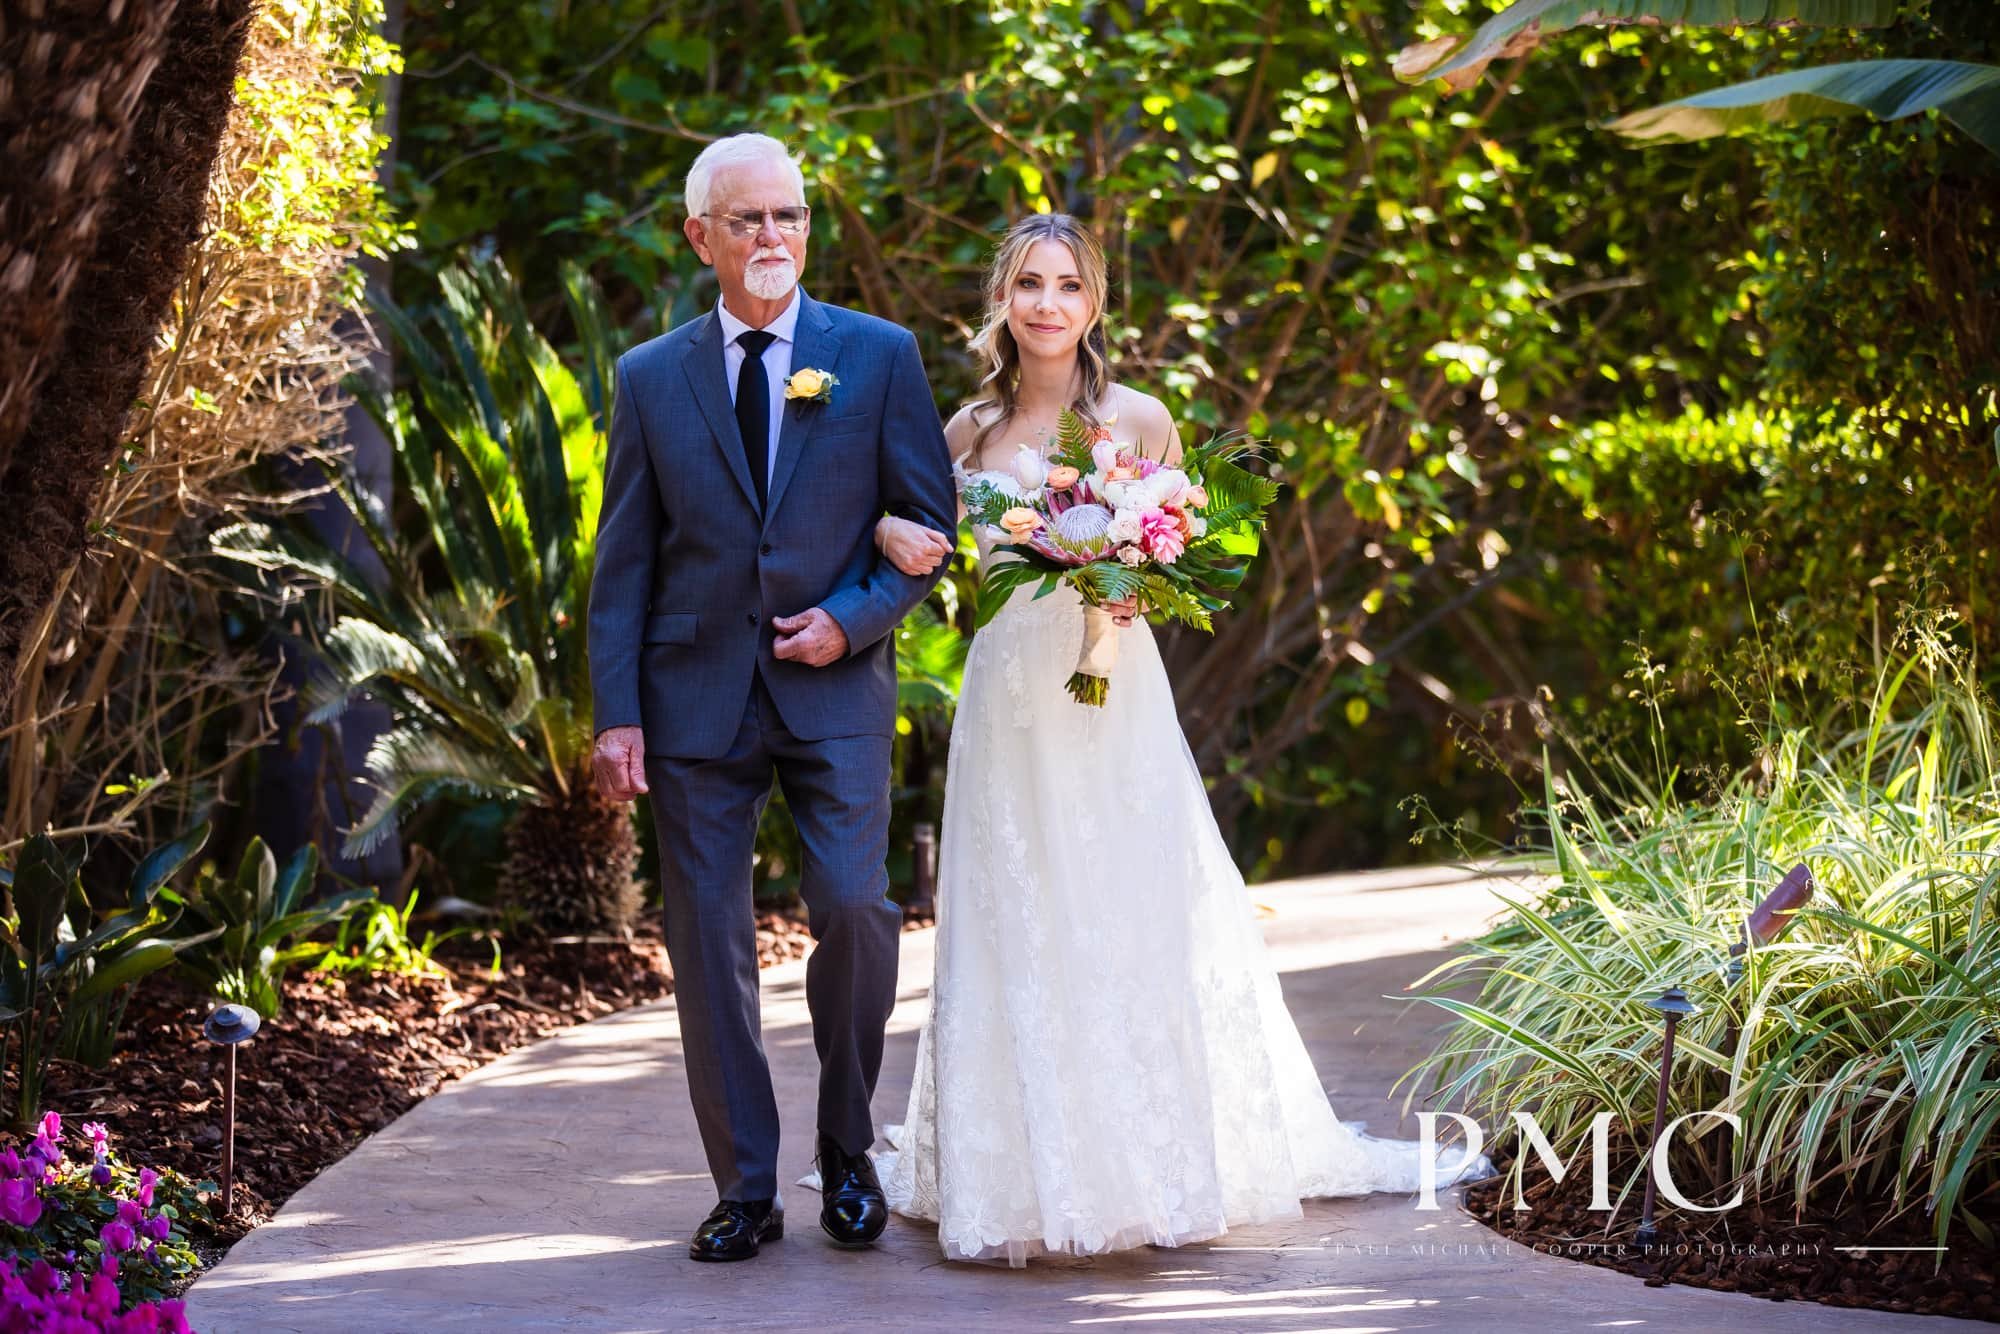 Grand Tradition Estate - Fallbrook Wedding - Best San Diego Wedding Photographer-26.jpg